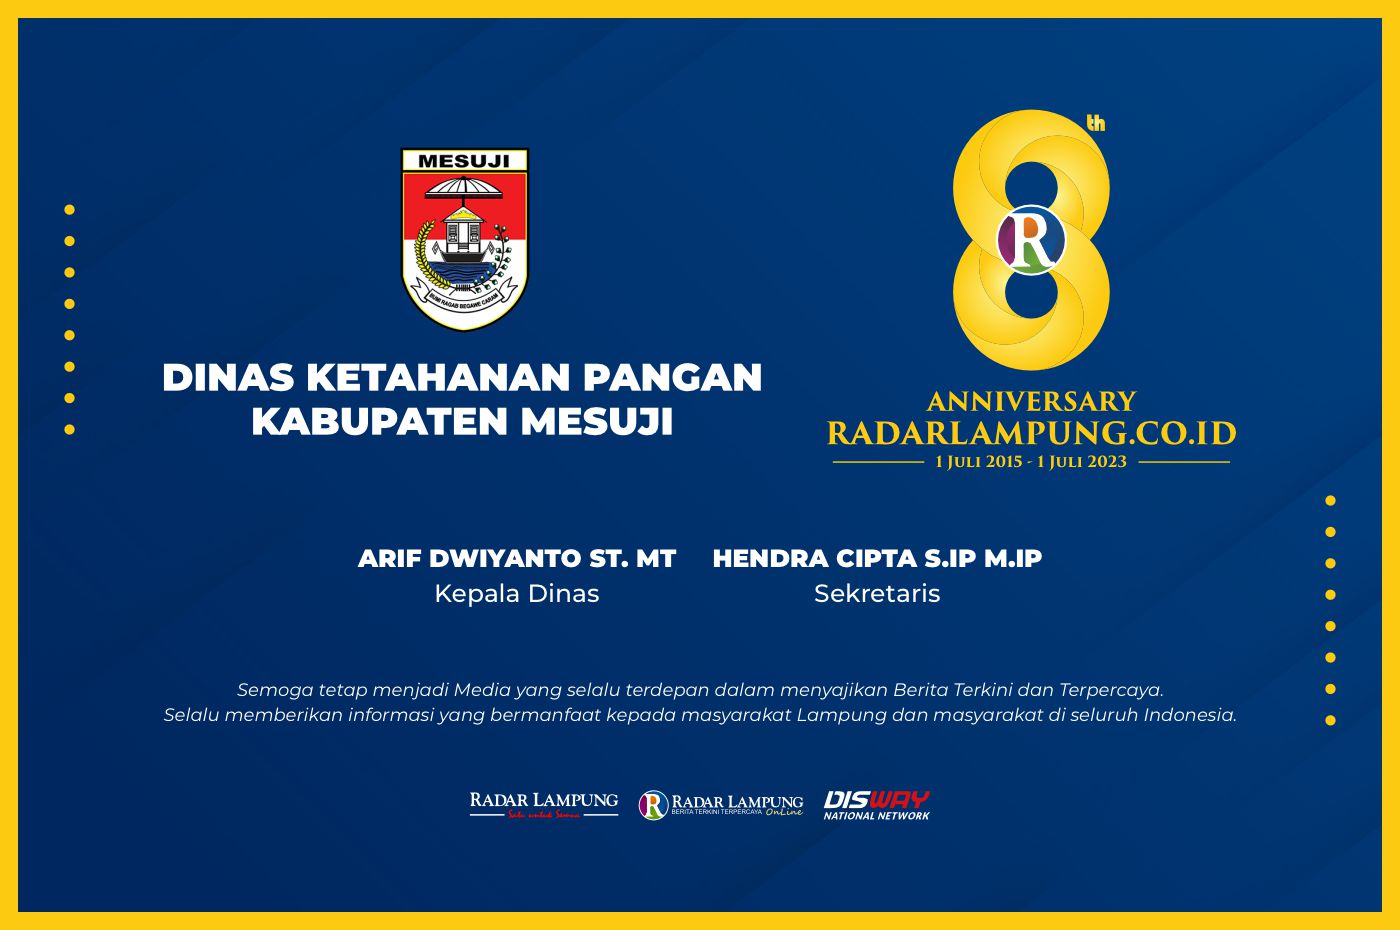 Dinas Ketahanan Pangan Kabupaten Mesuji: Selamat HUT ke-8 Radar Lampung Online